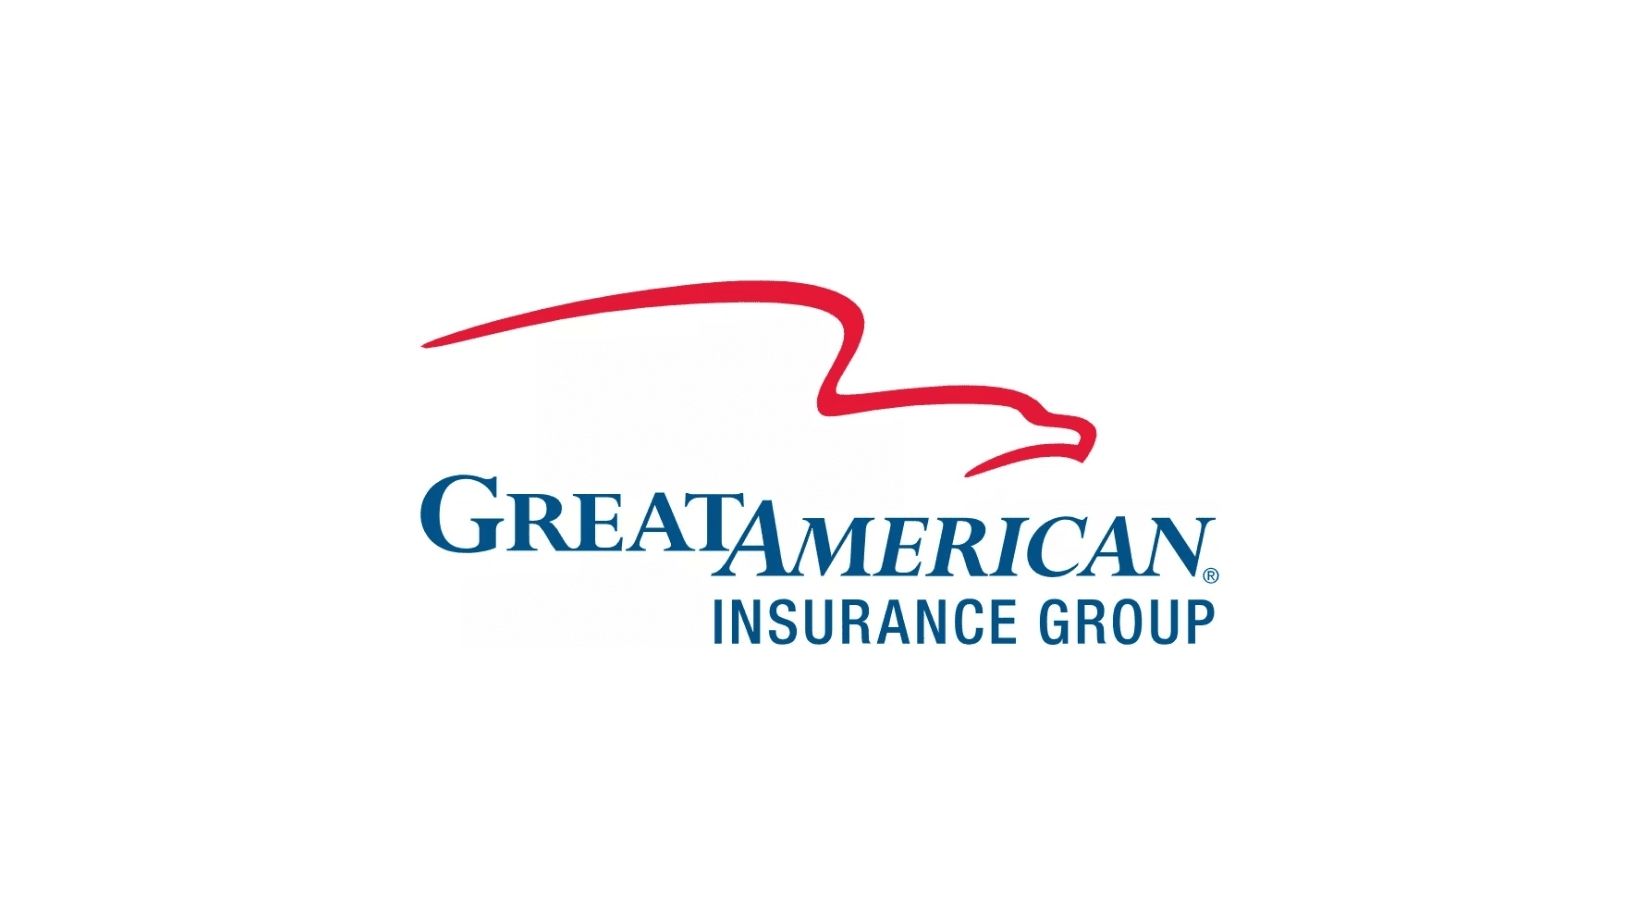 Great american insurance companies logo